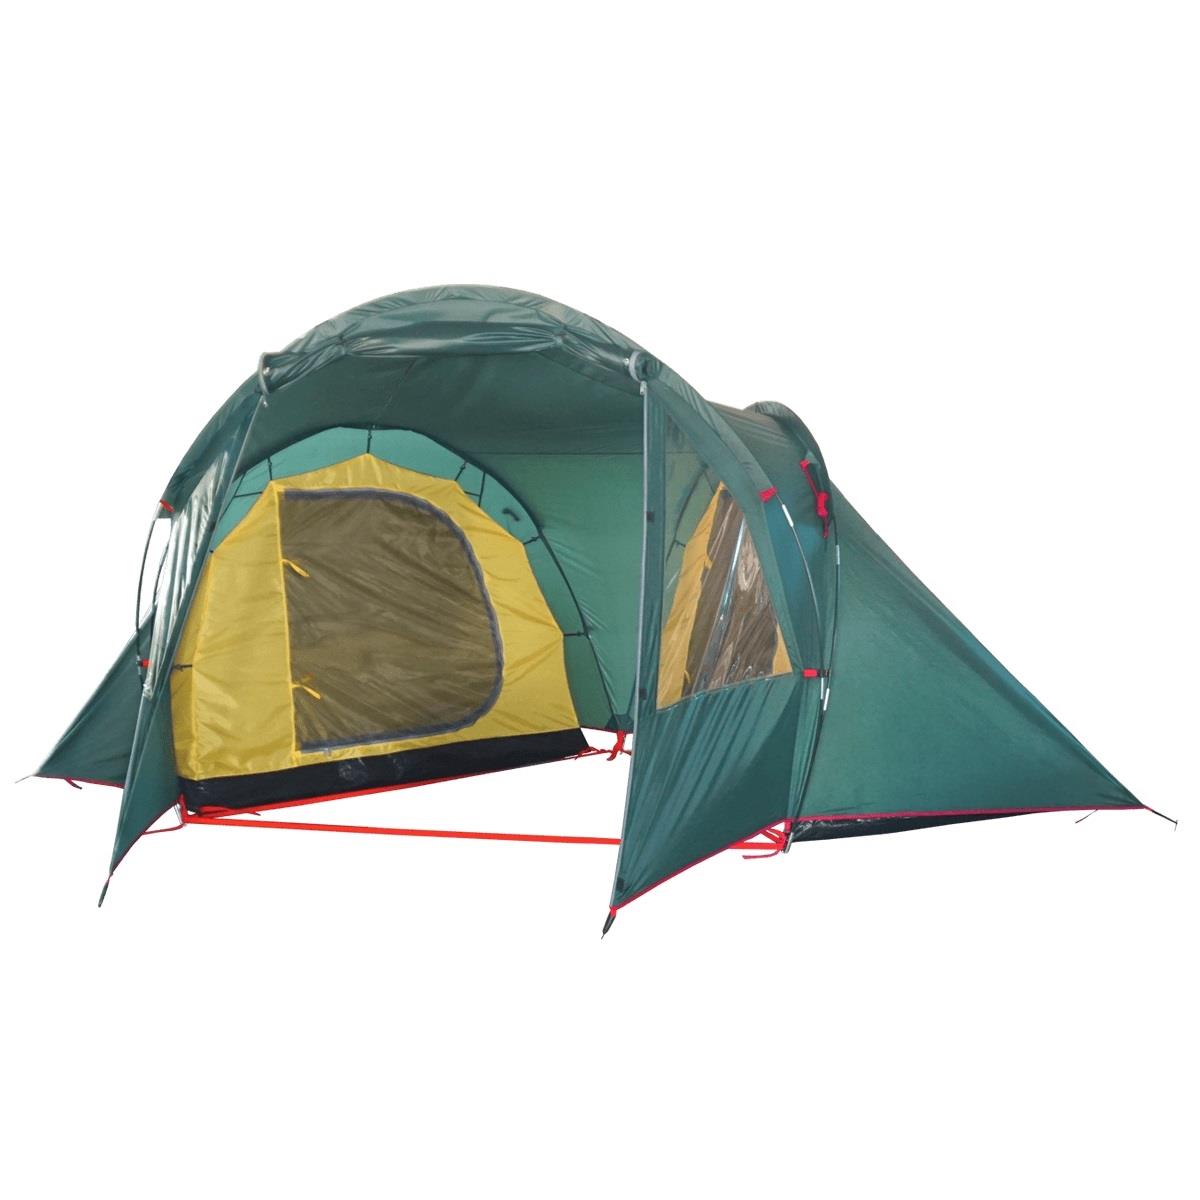 Палатка Double 4 (T0509)  BTrace палатка canio 4 t0249 btrace